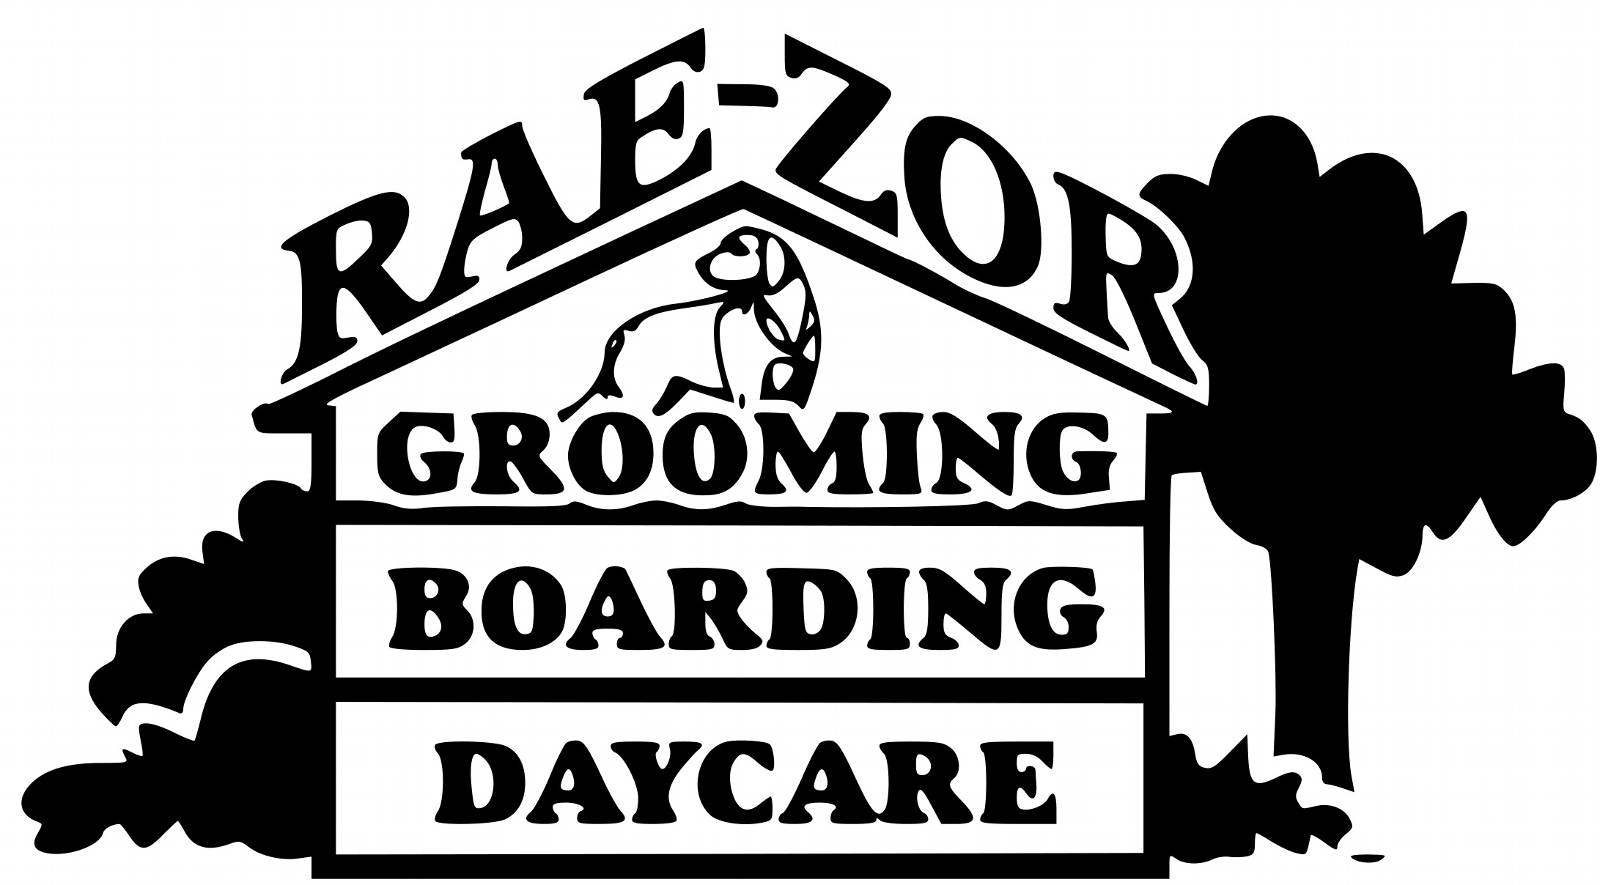 Rae-Zor Grooming Boarding Daycare